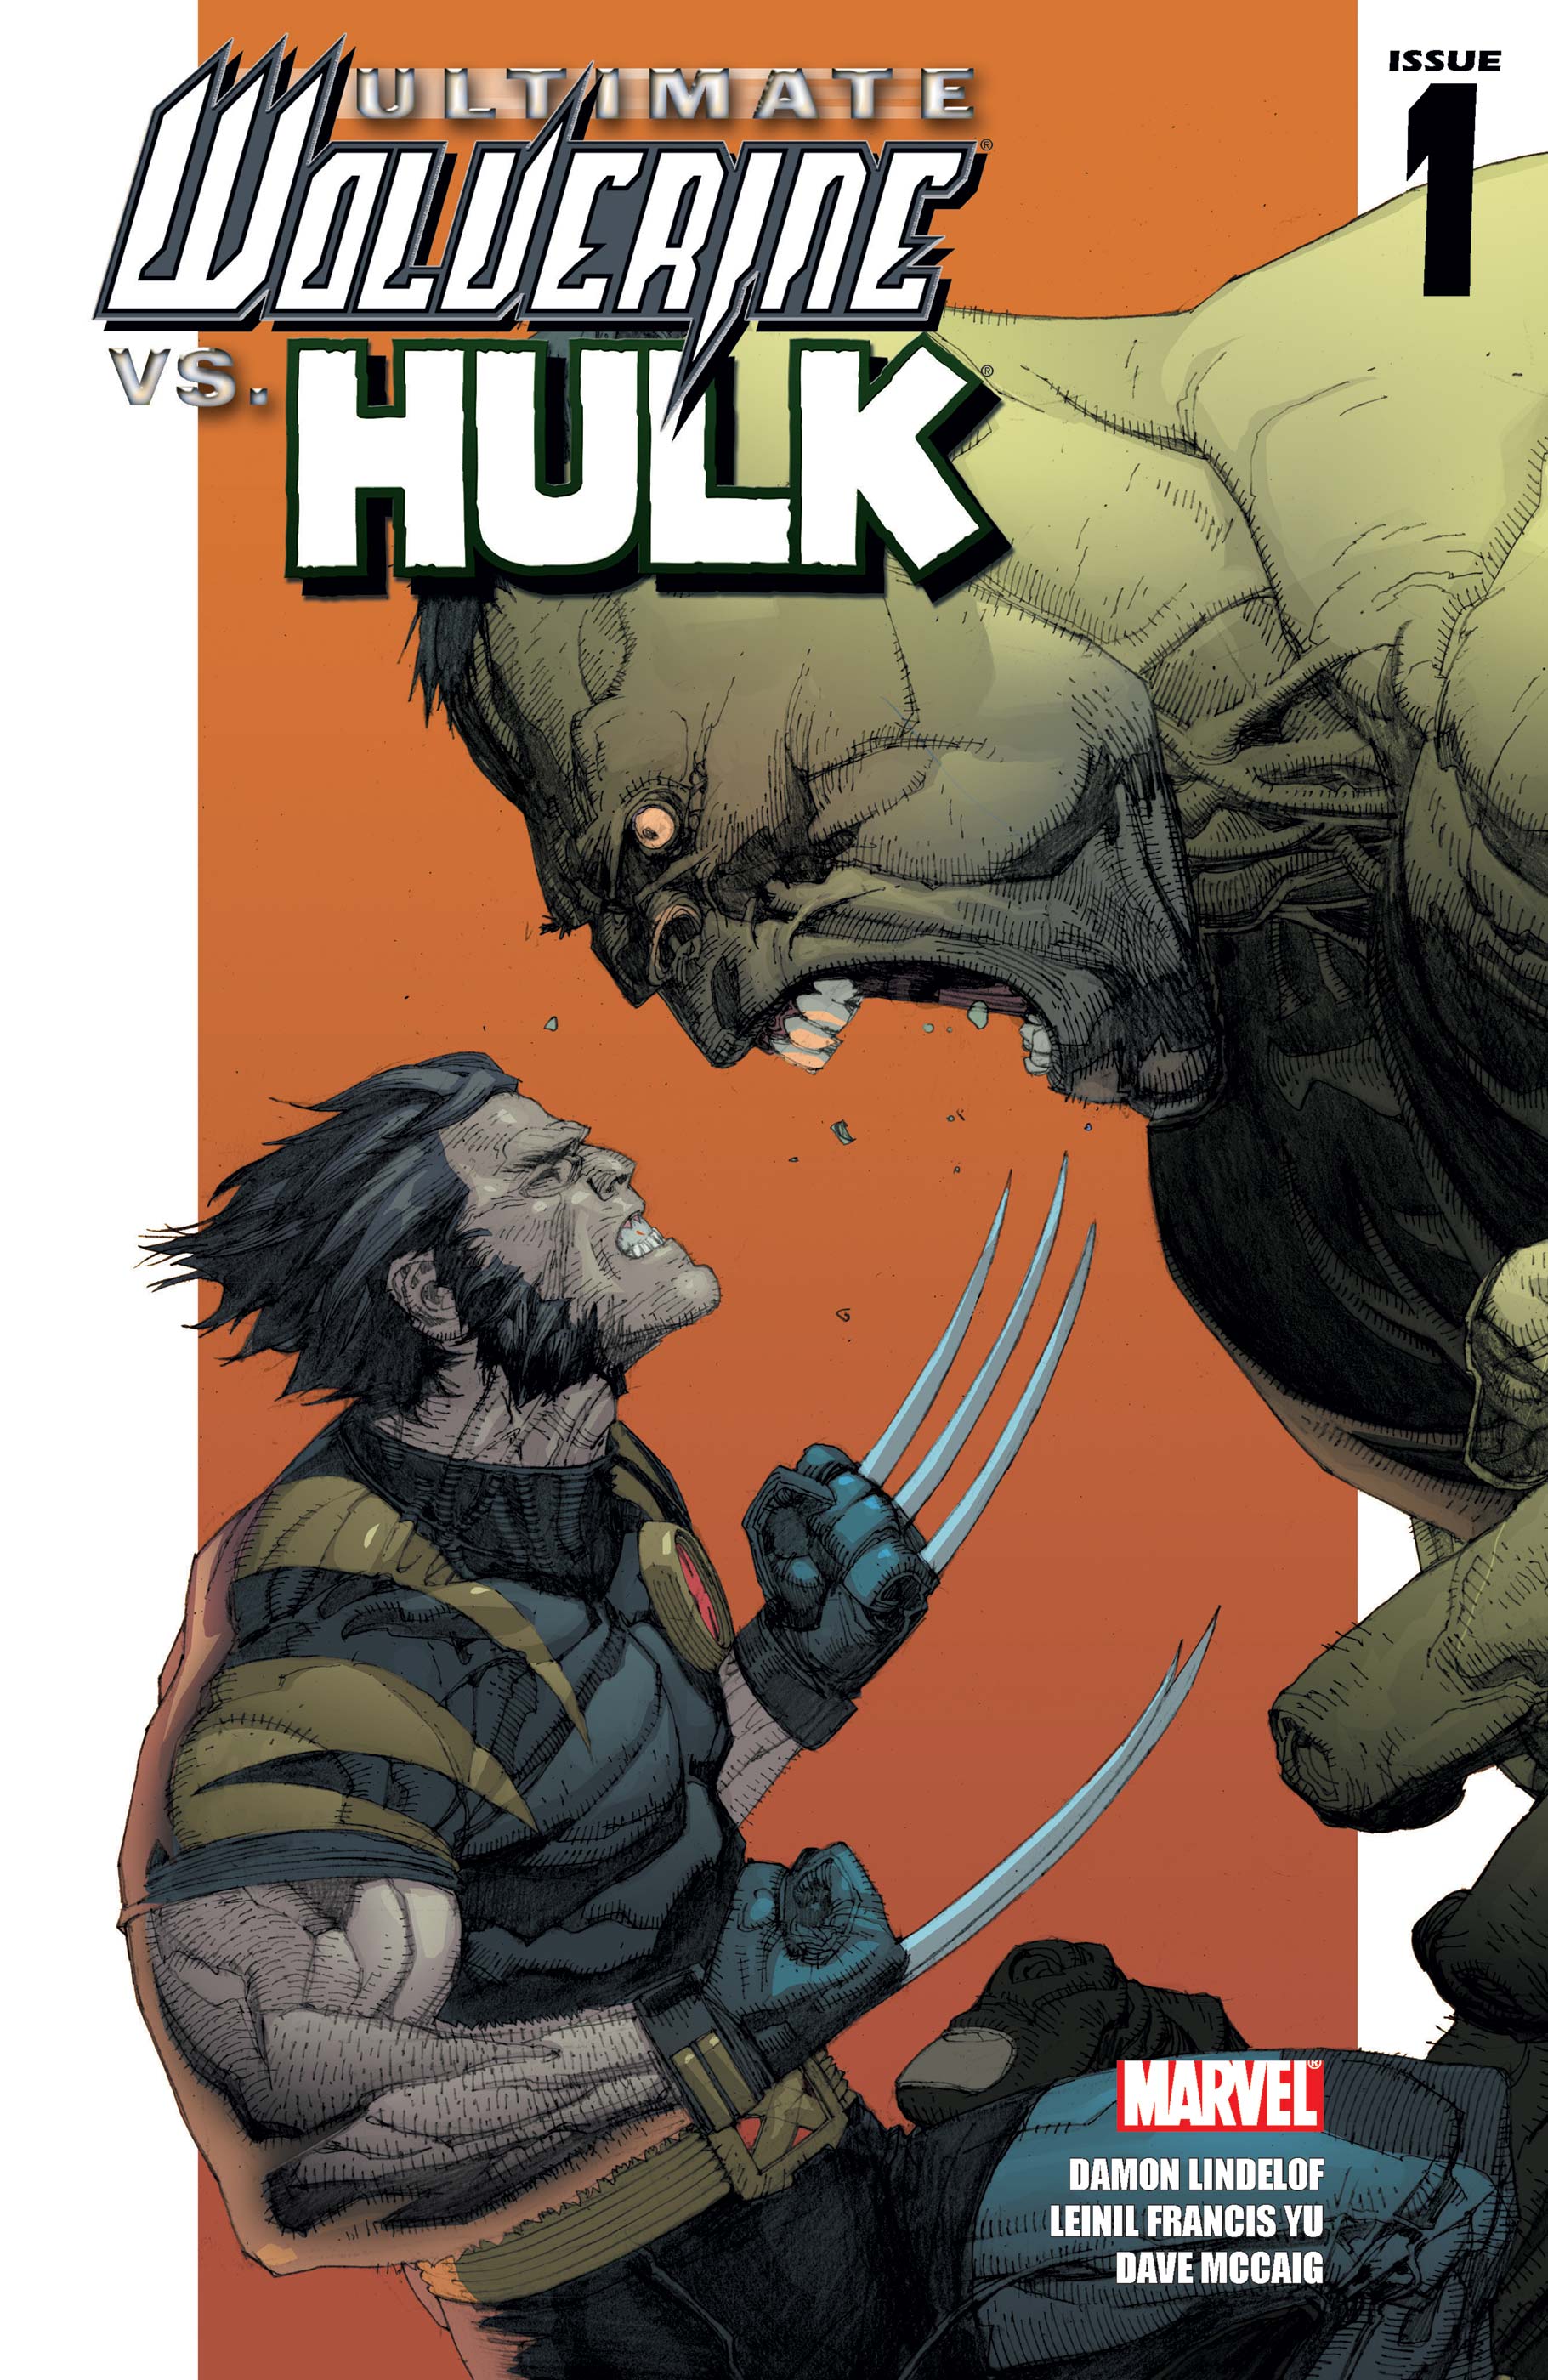 Ultimate Wolverine Vs. Hulk (2005) #1